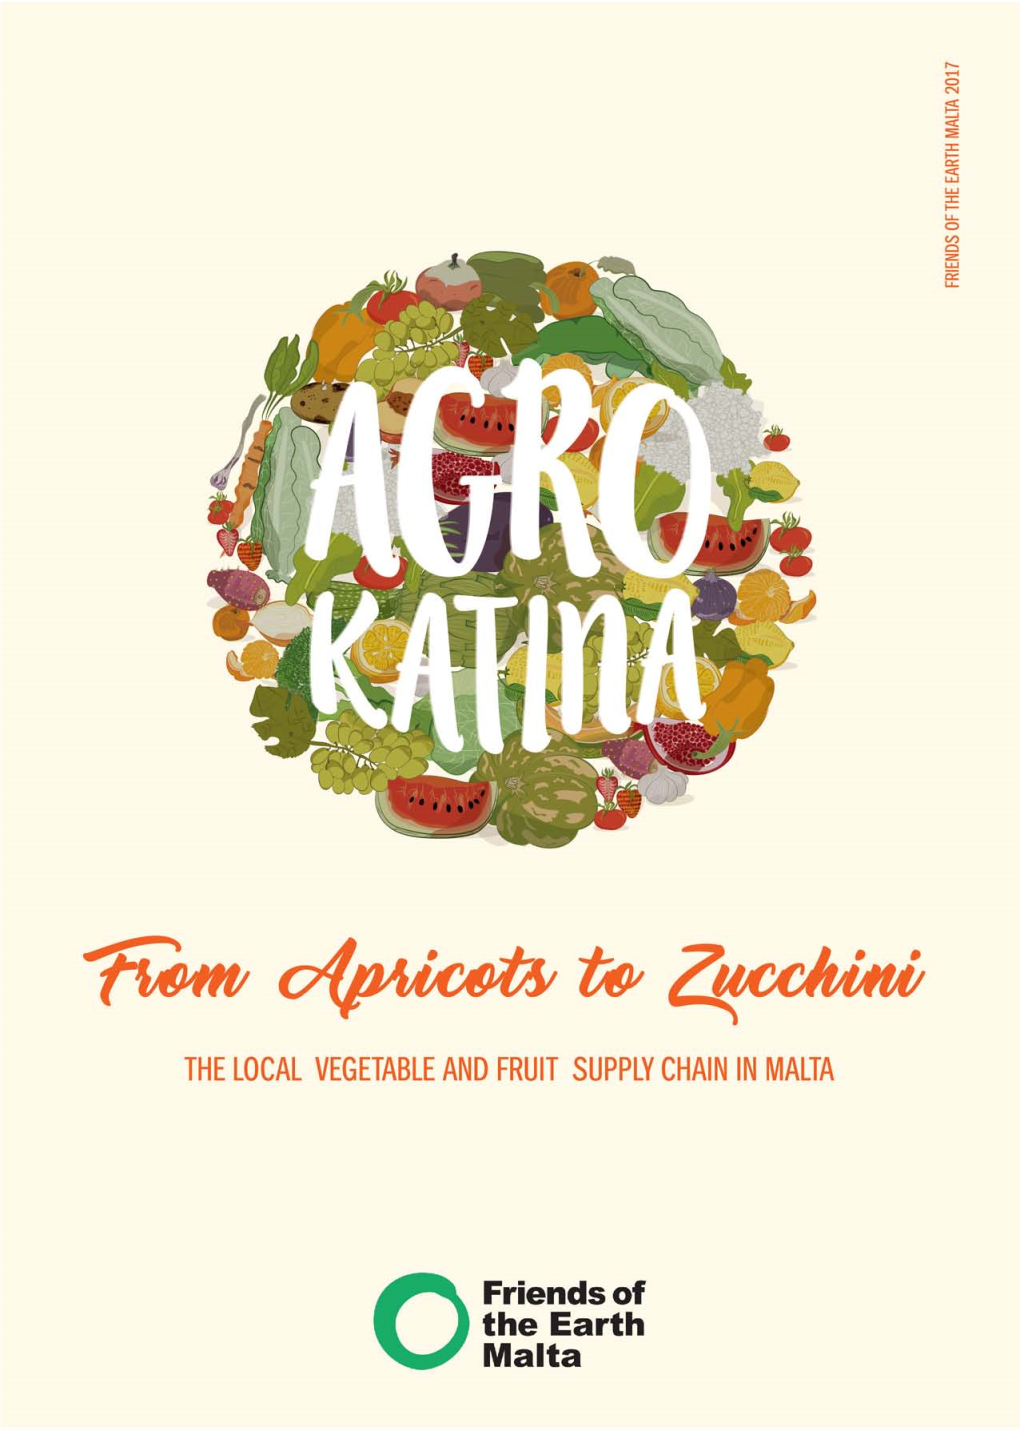 Download the Agro Katina Report